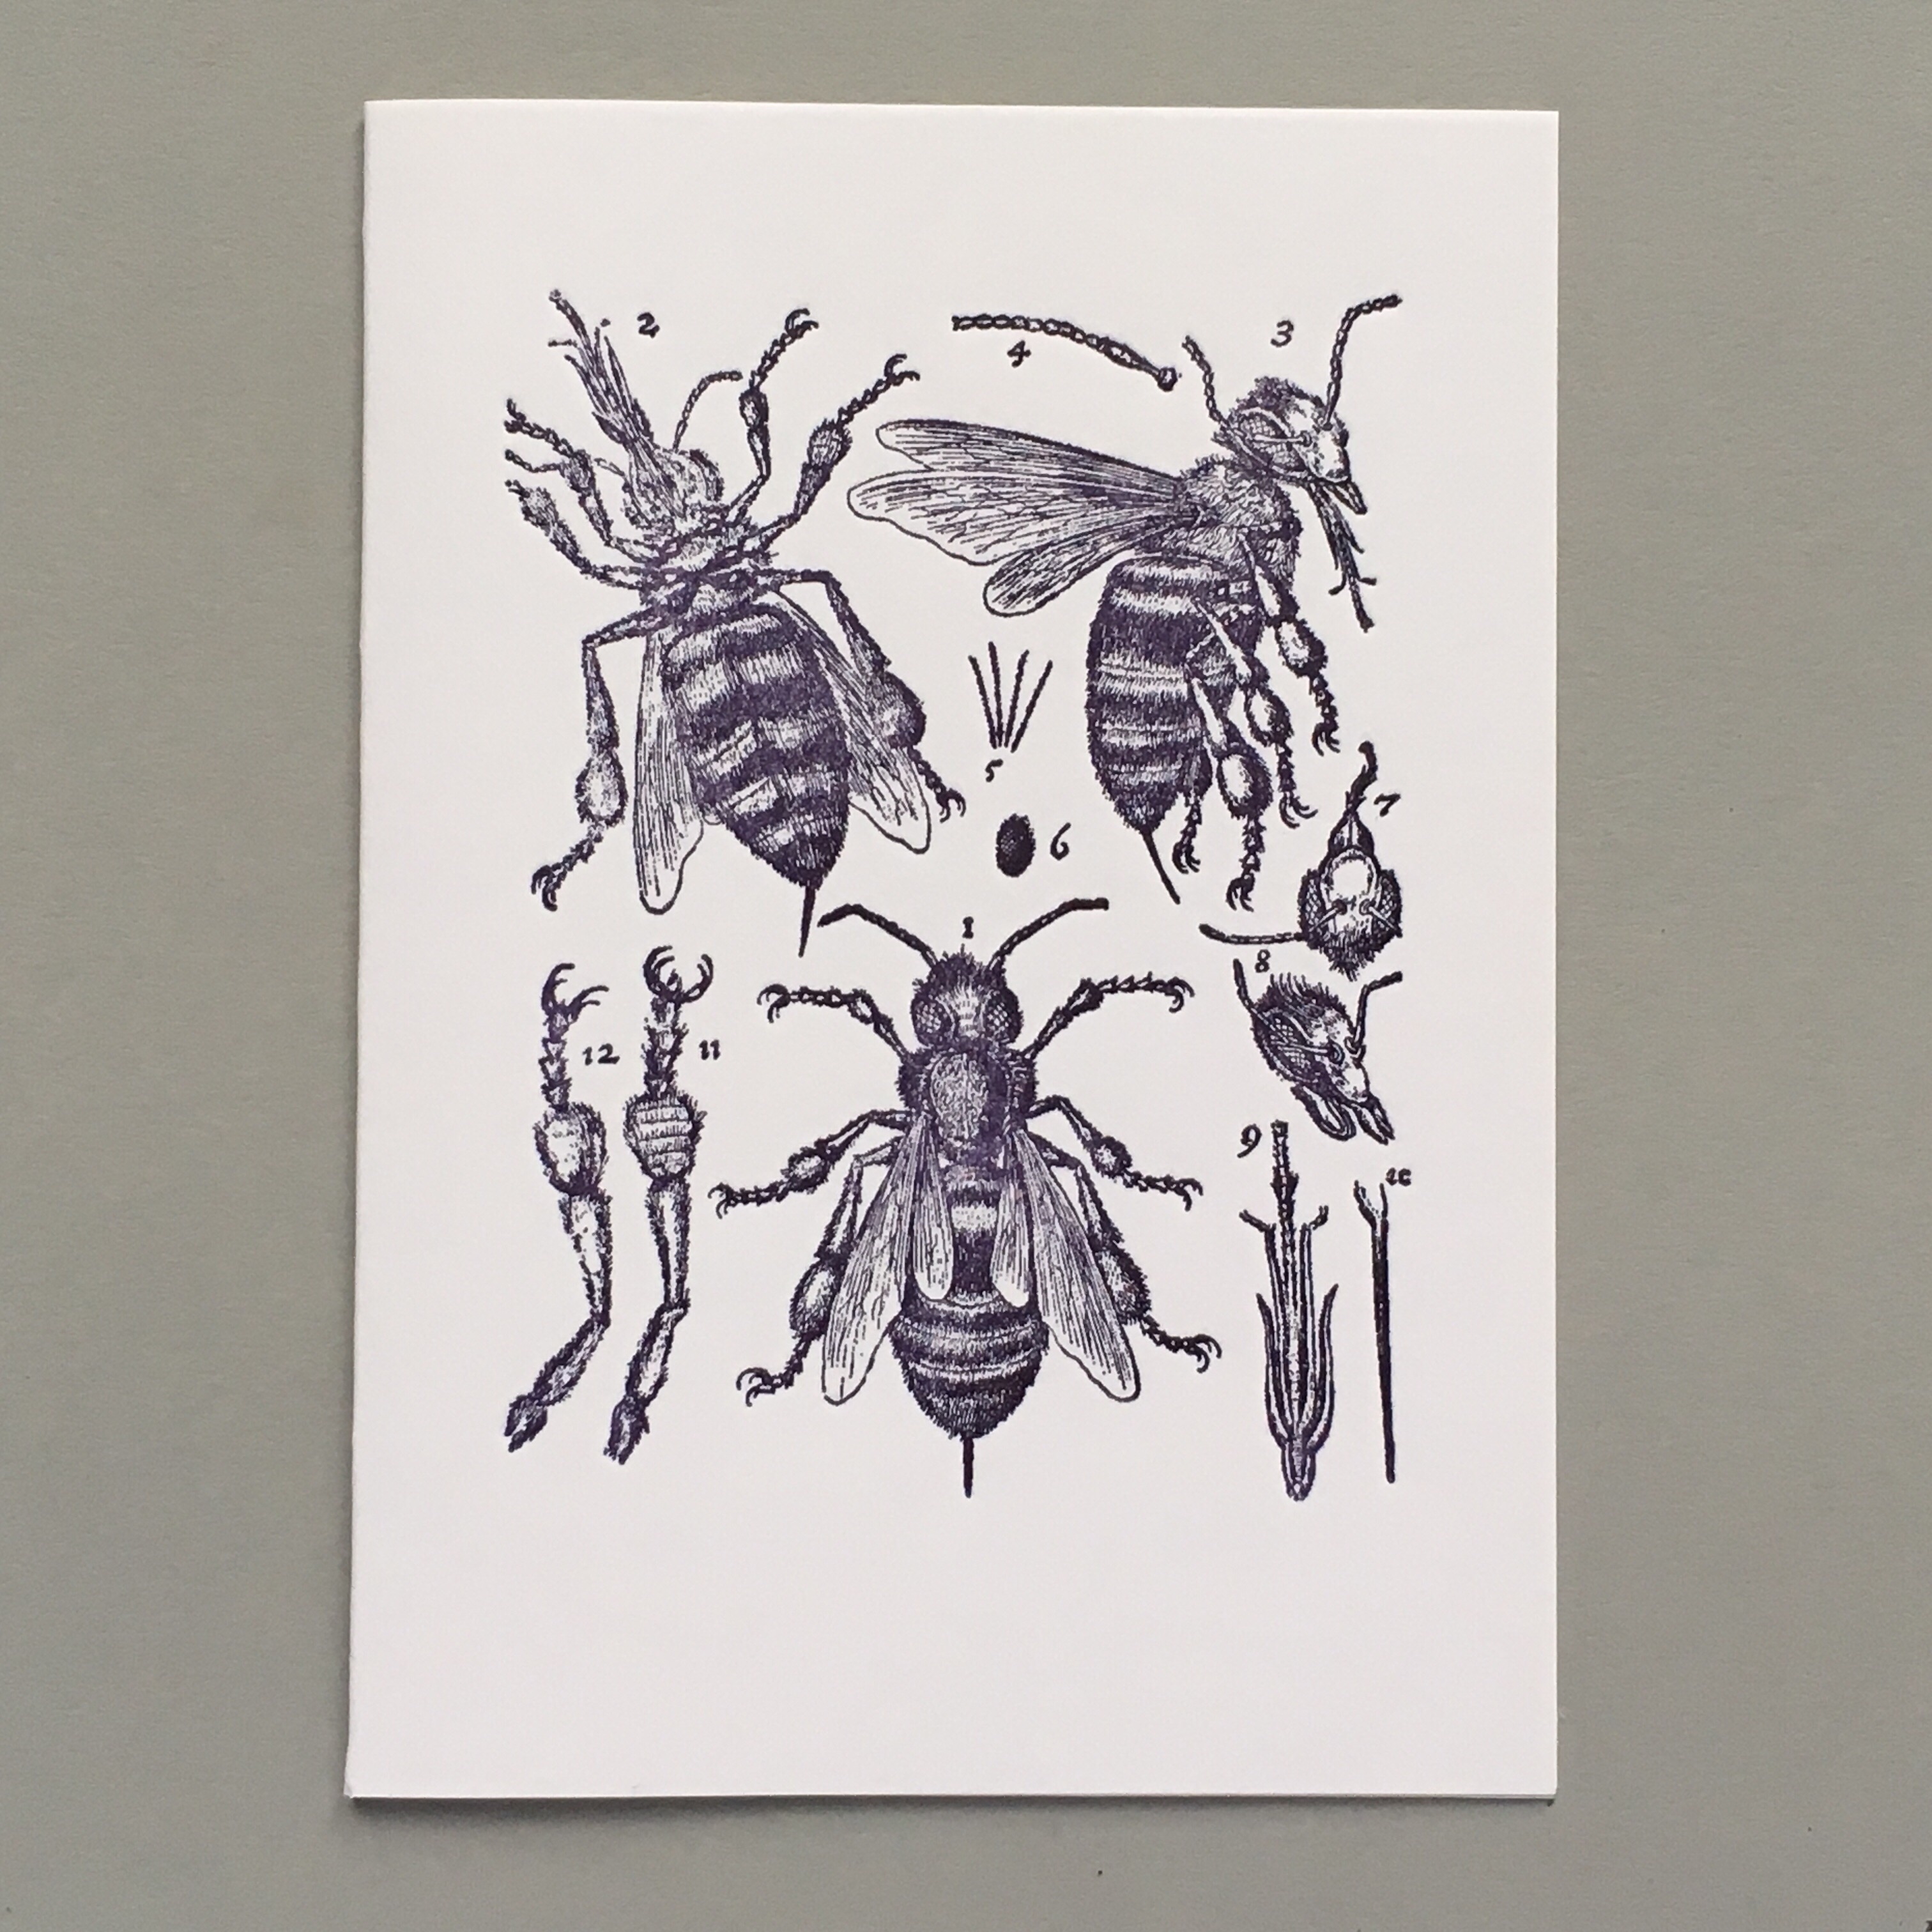 Bee anatomy